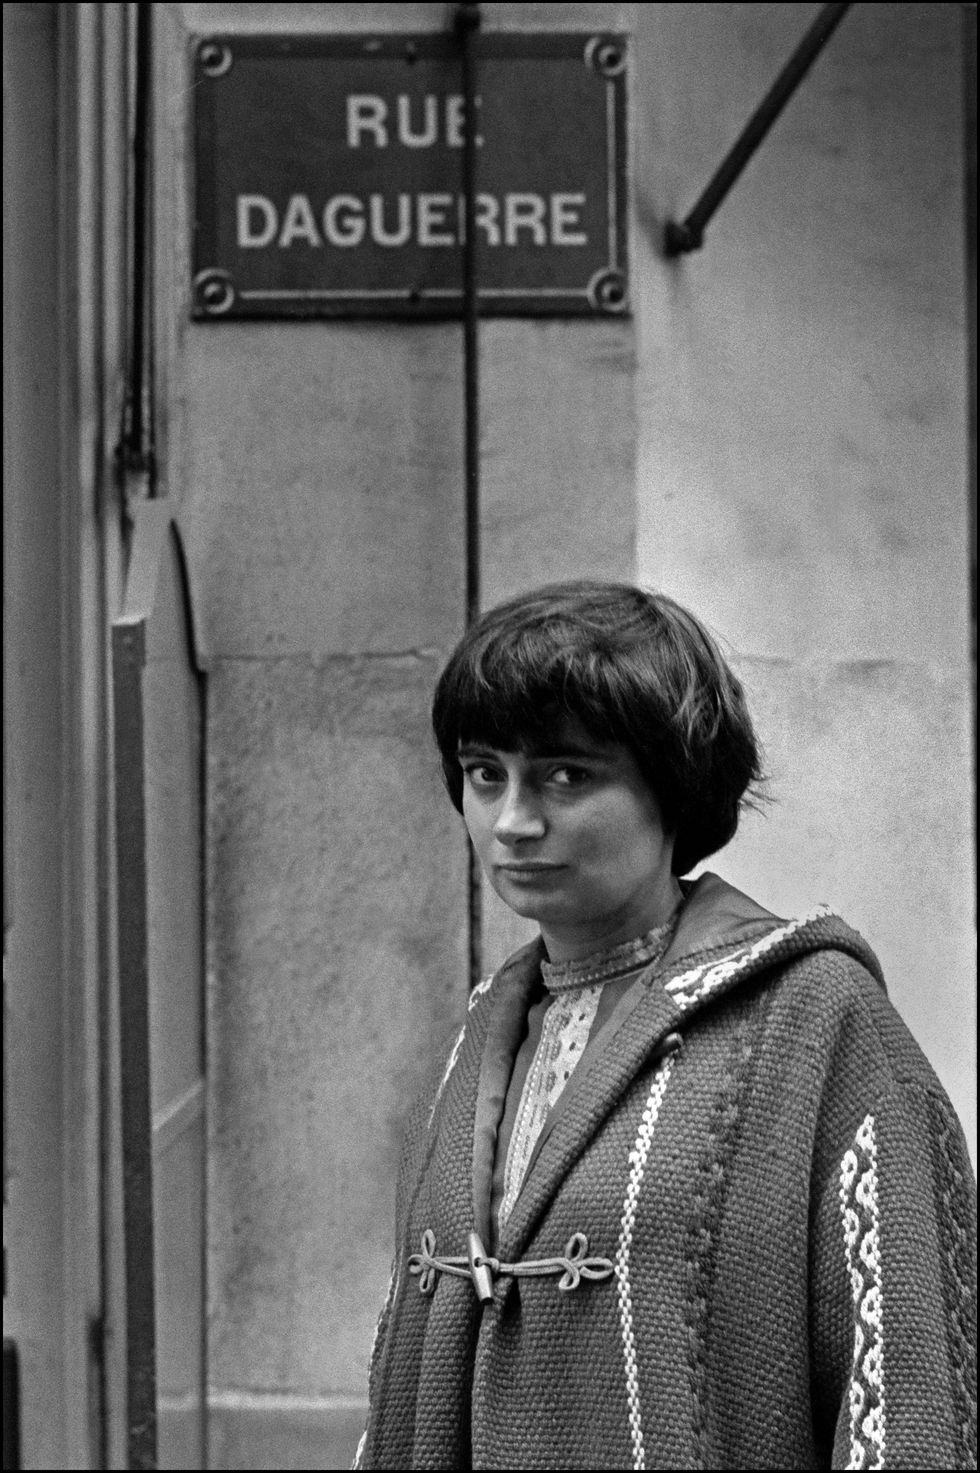 france  paris  agnes varda, french film director and professeur at the european graduate school on the rue daguerre  1963